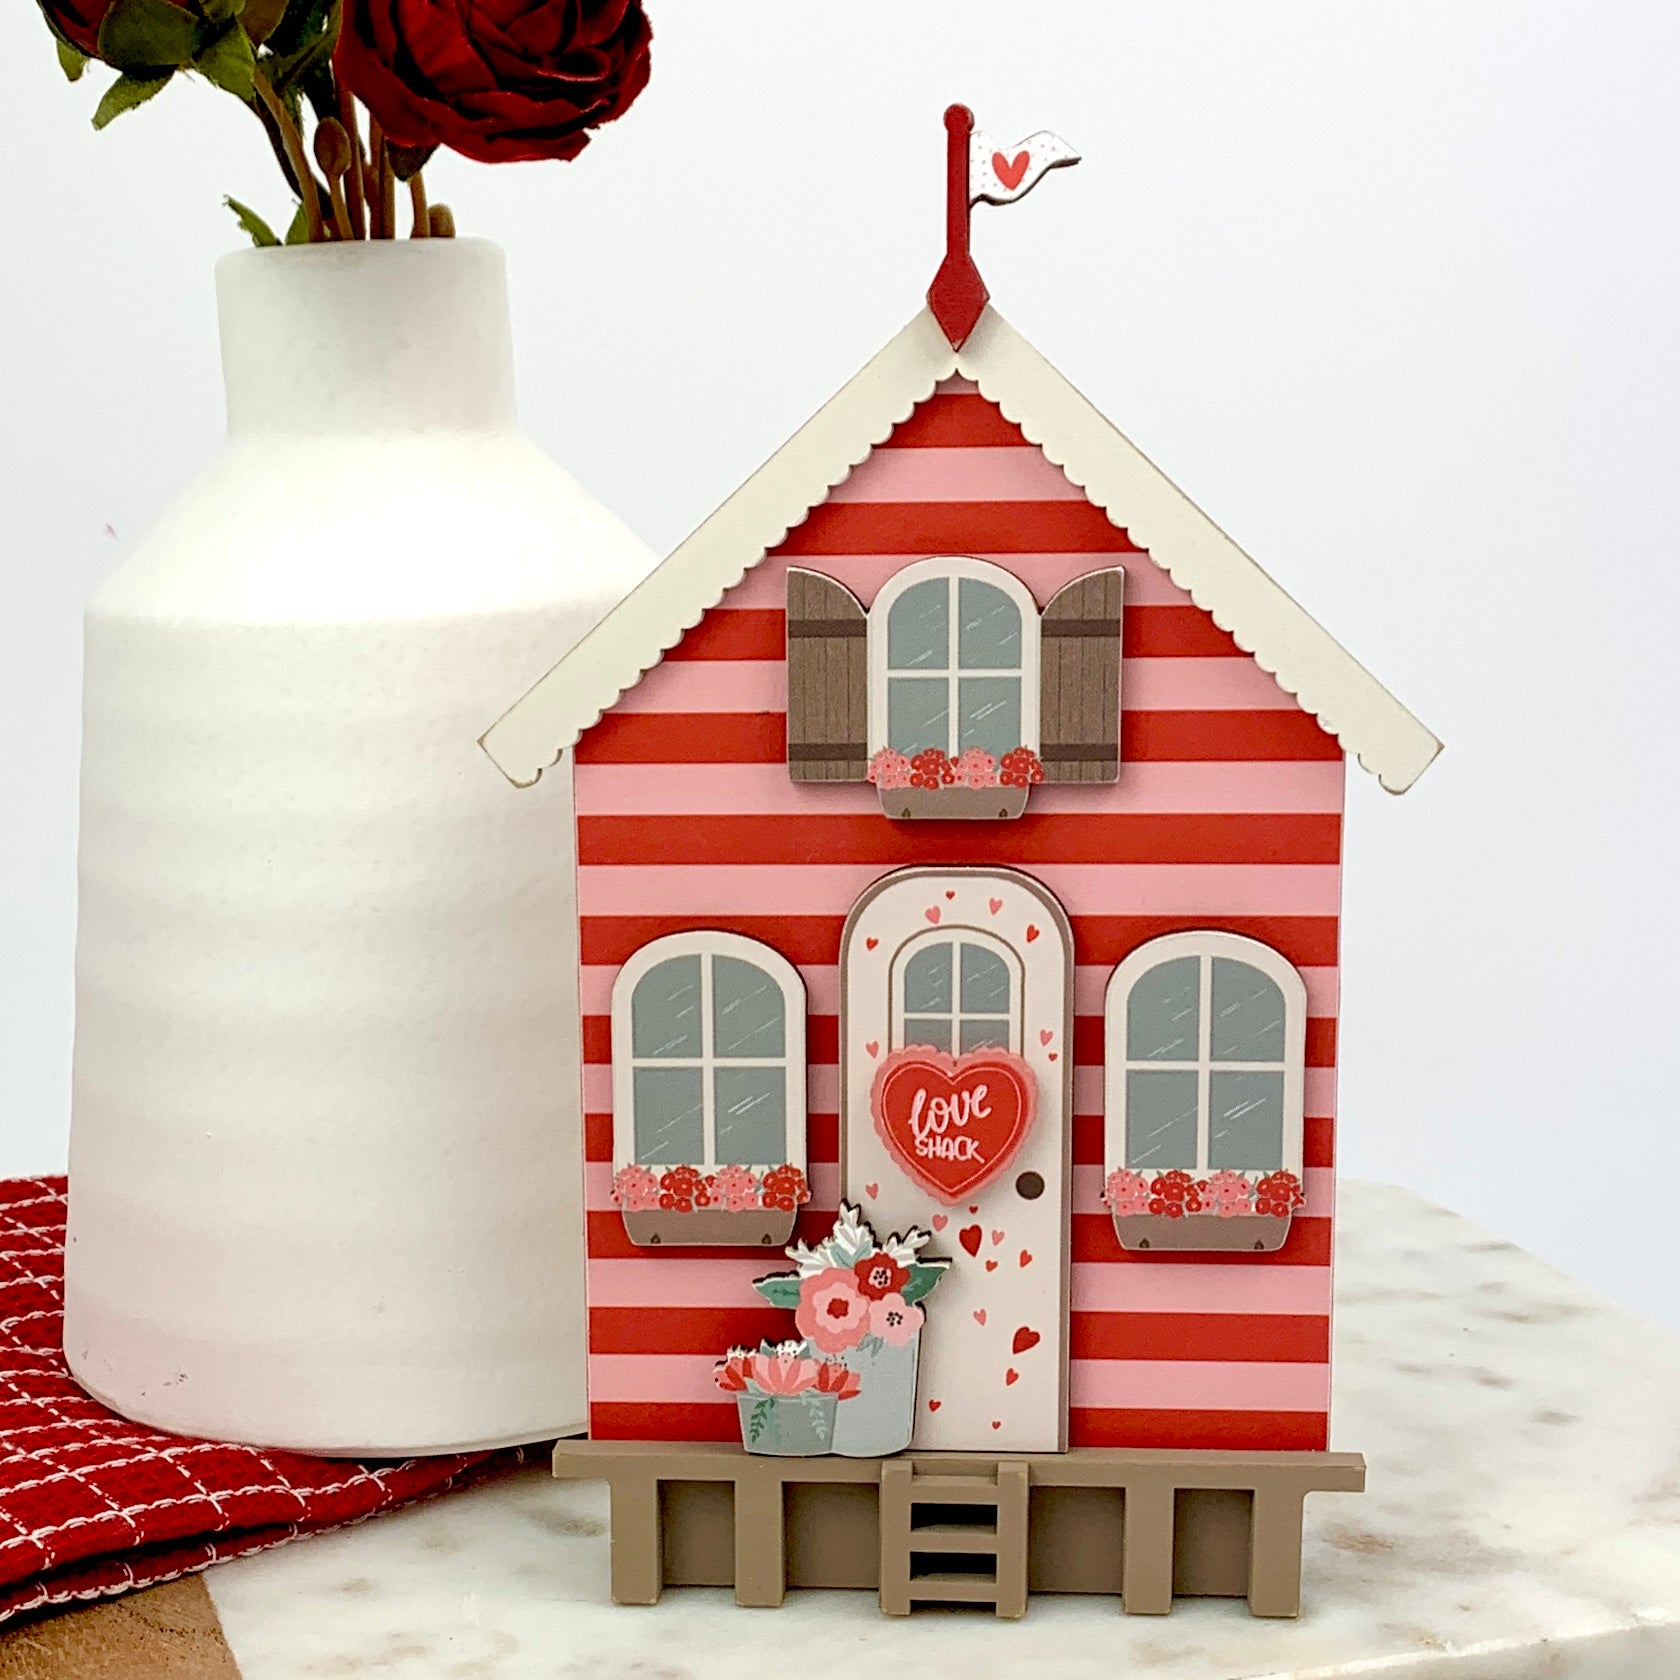 Valentine love shack wood decoration DIY craft kit.  Pink and red striped Valentine house